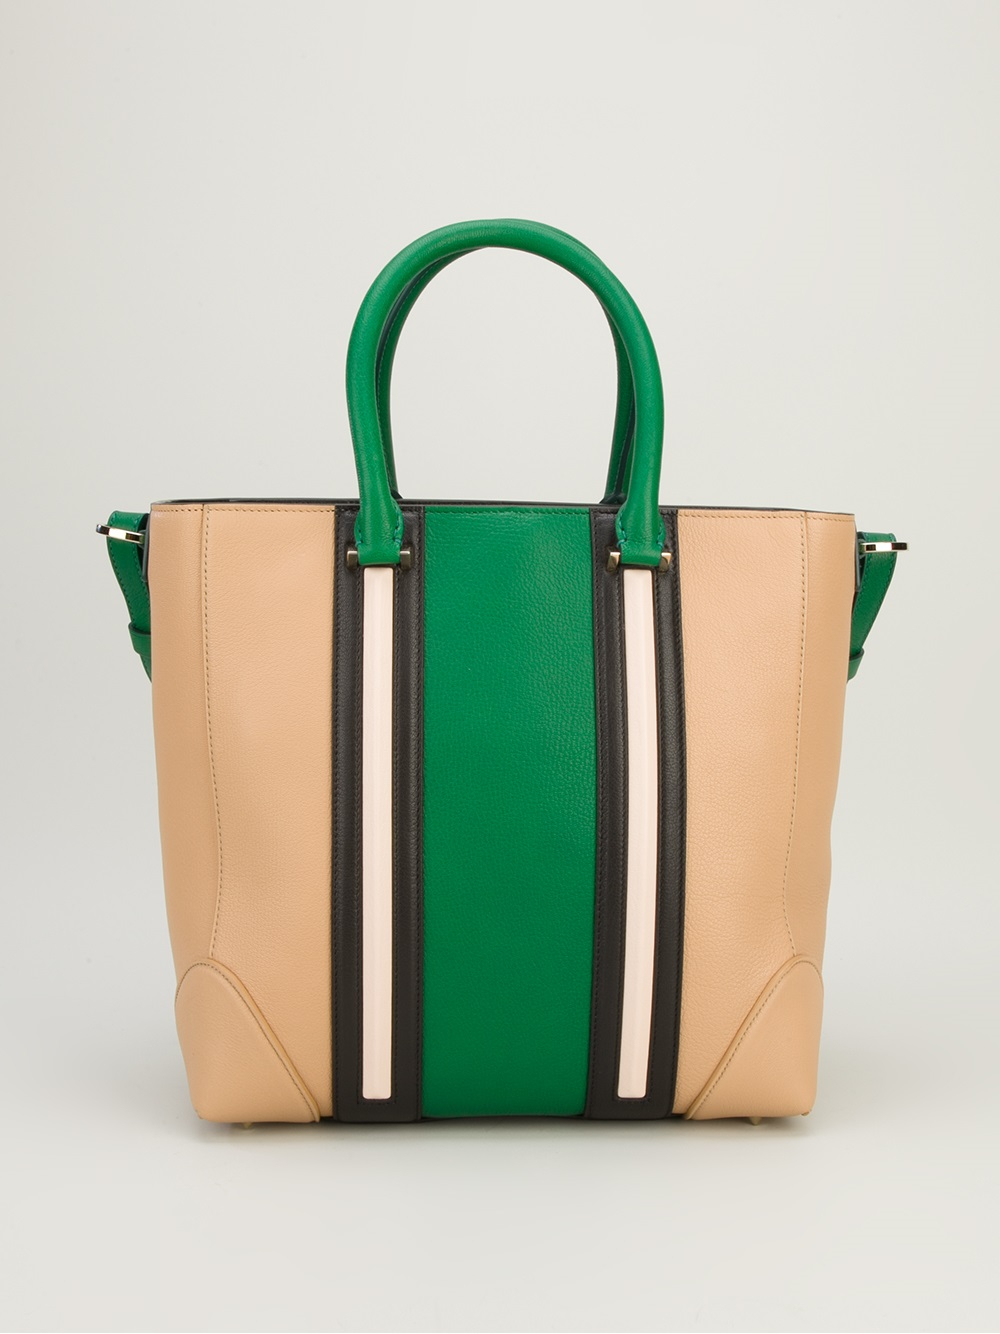 Lyst - Givenchy Medium 'Lucrezia' Shopper Tote in Green